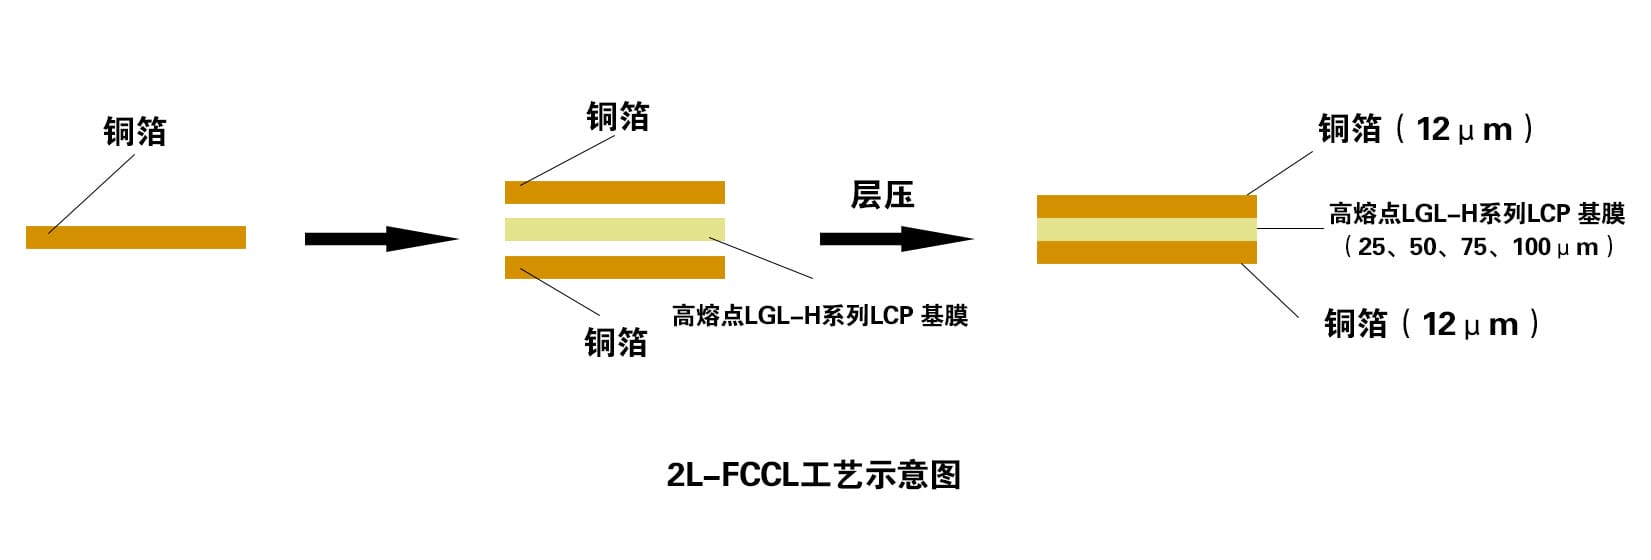 2L-FCCL工艺示意图.jpg